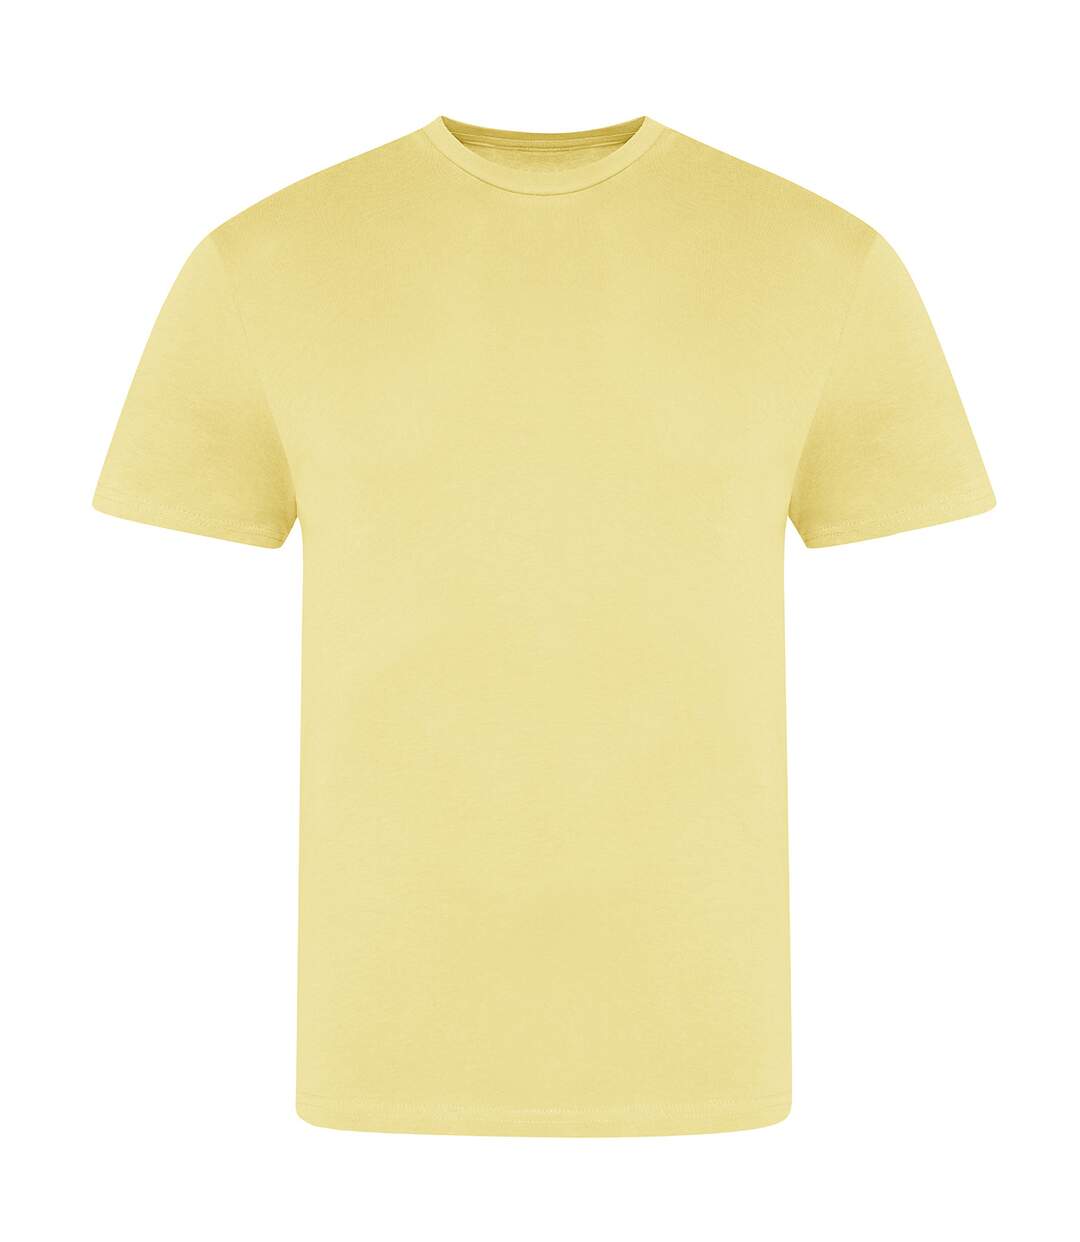 Awdis T-Shirt unisexe adulte The 100 (Sherbet Lemon) - UTRW7727